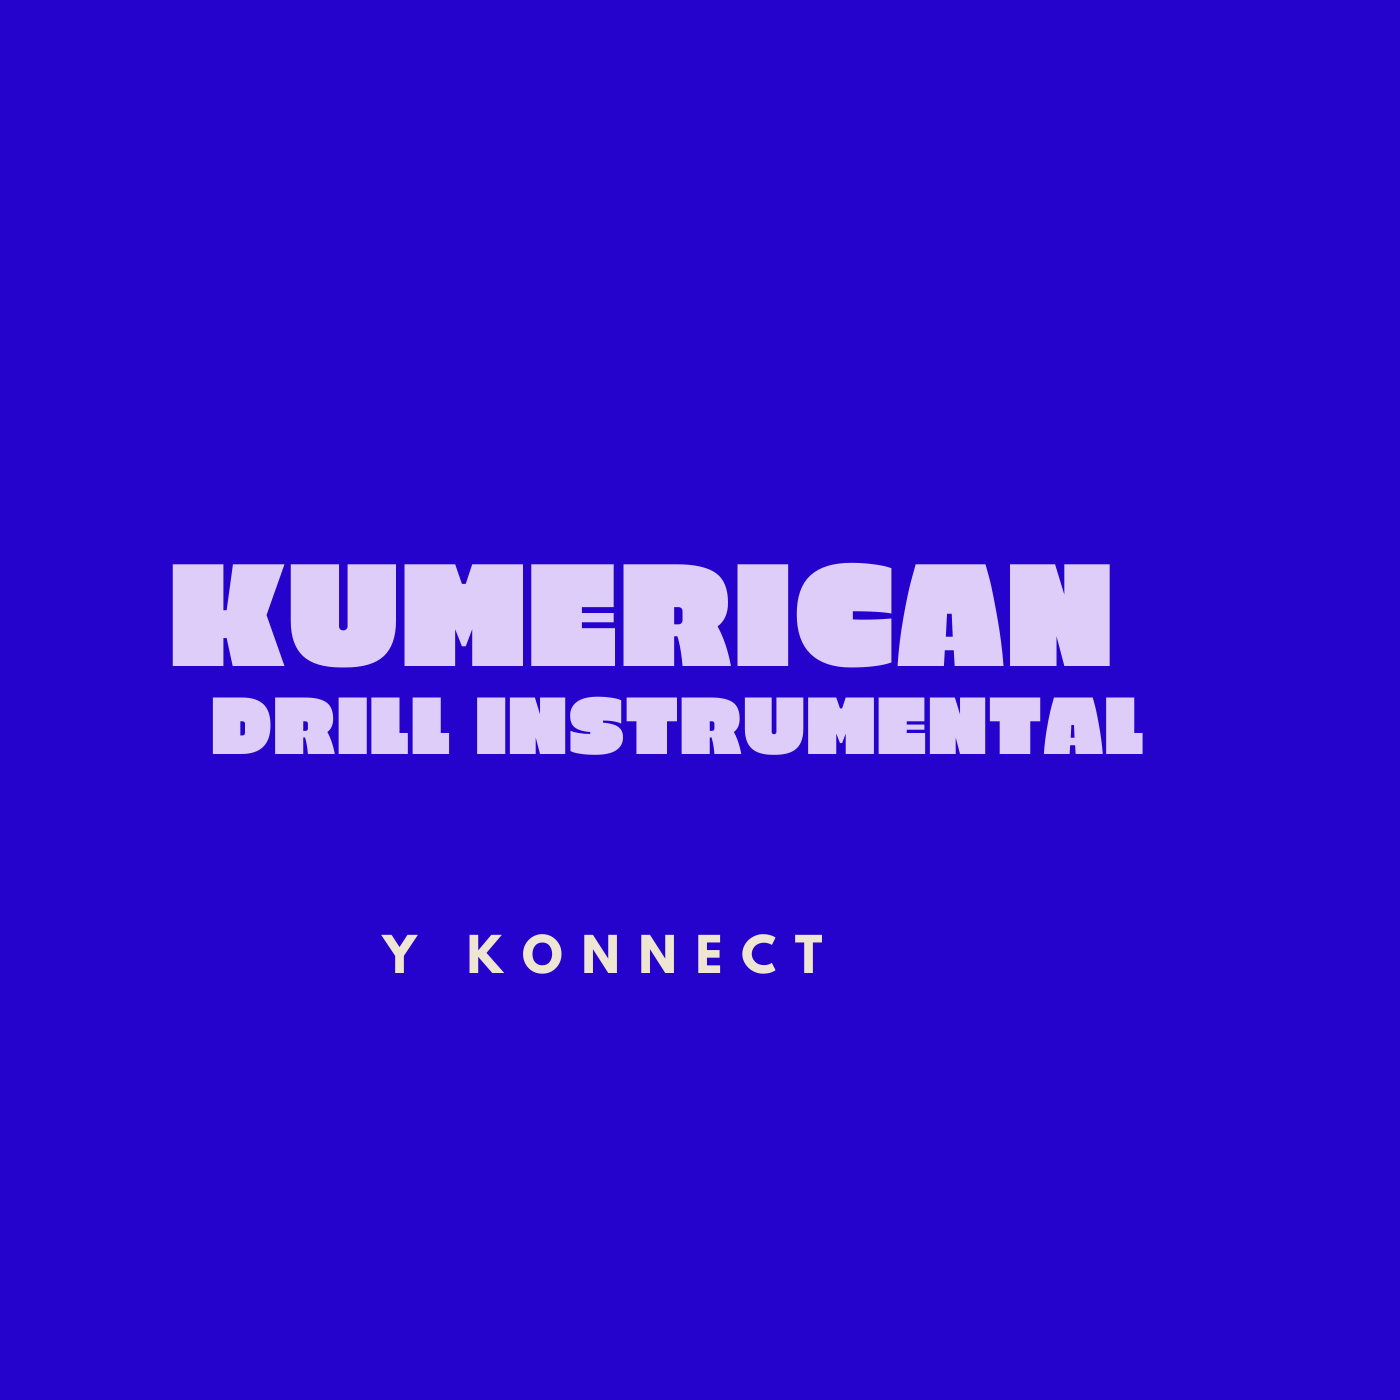 Kumerican Drill Instrumental Mp3 Download | Y Koonect